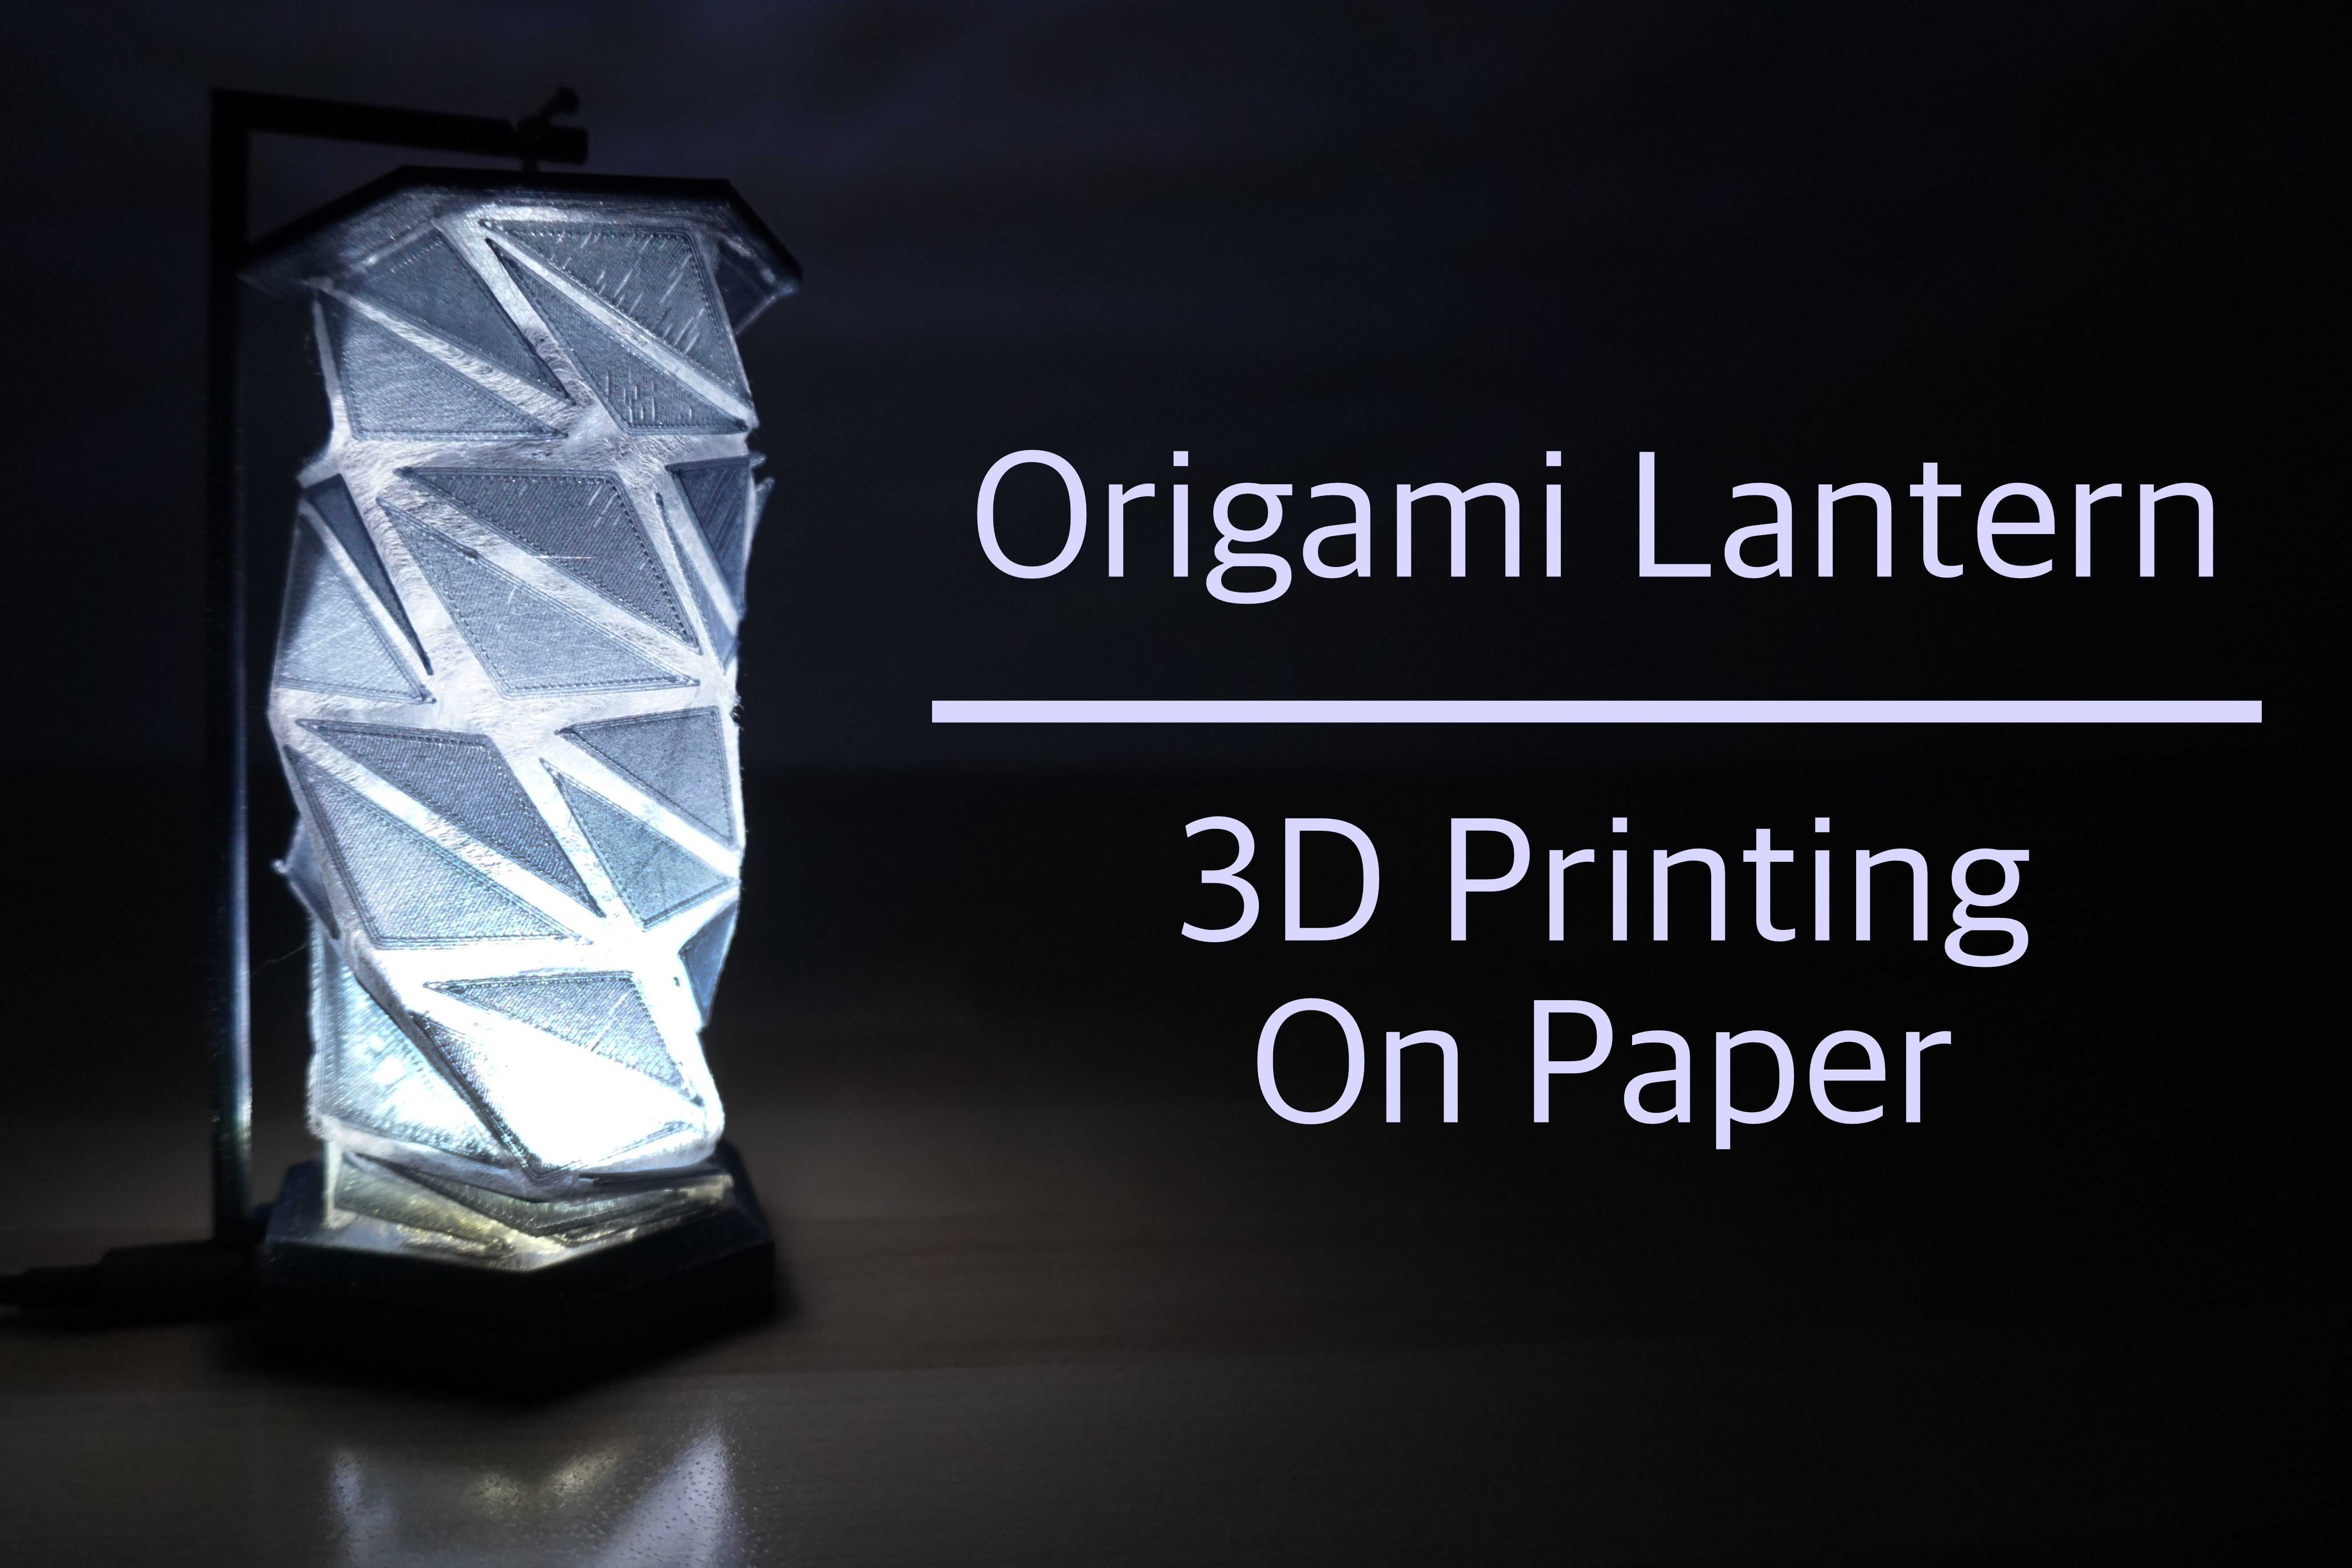 Origami Lantern: 3D Printing on Paper